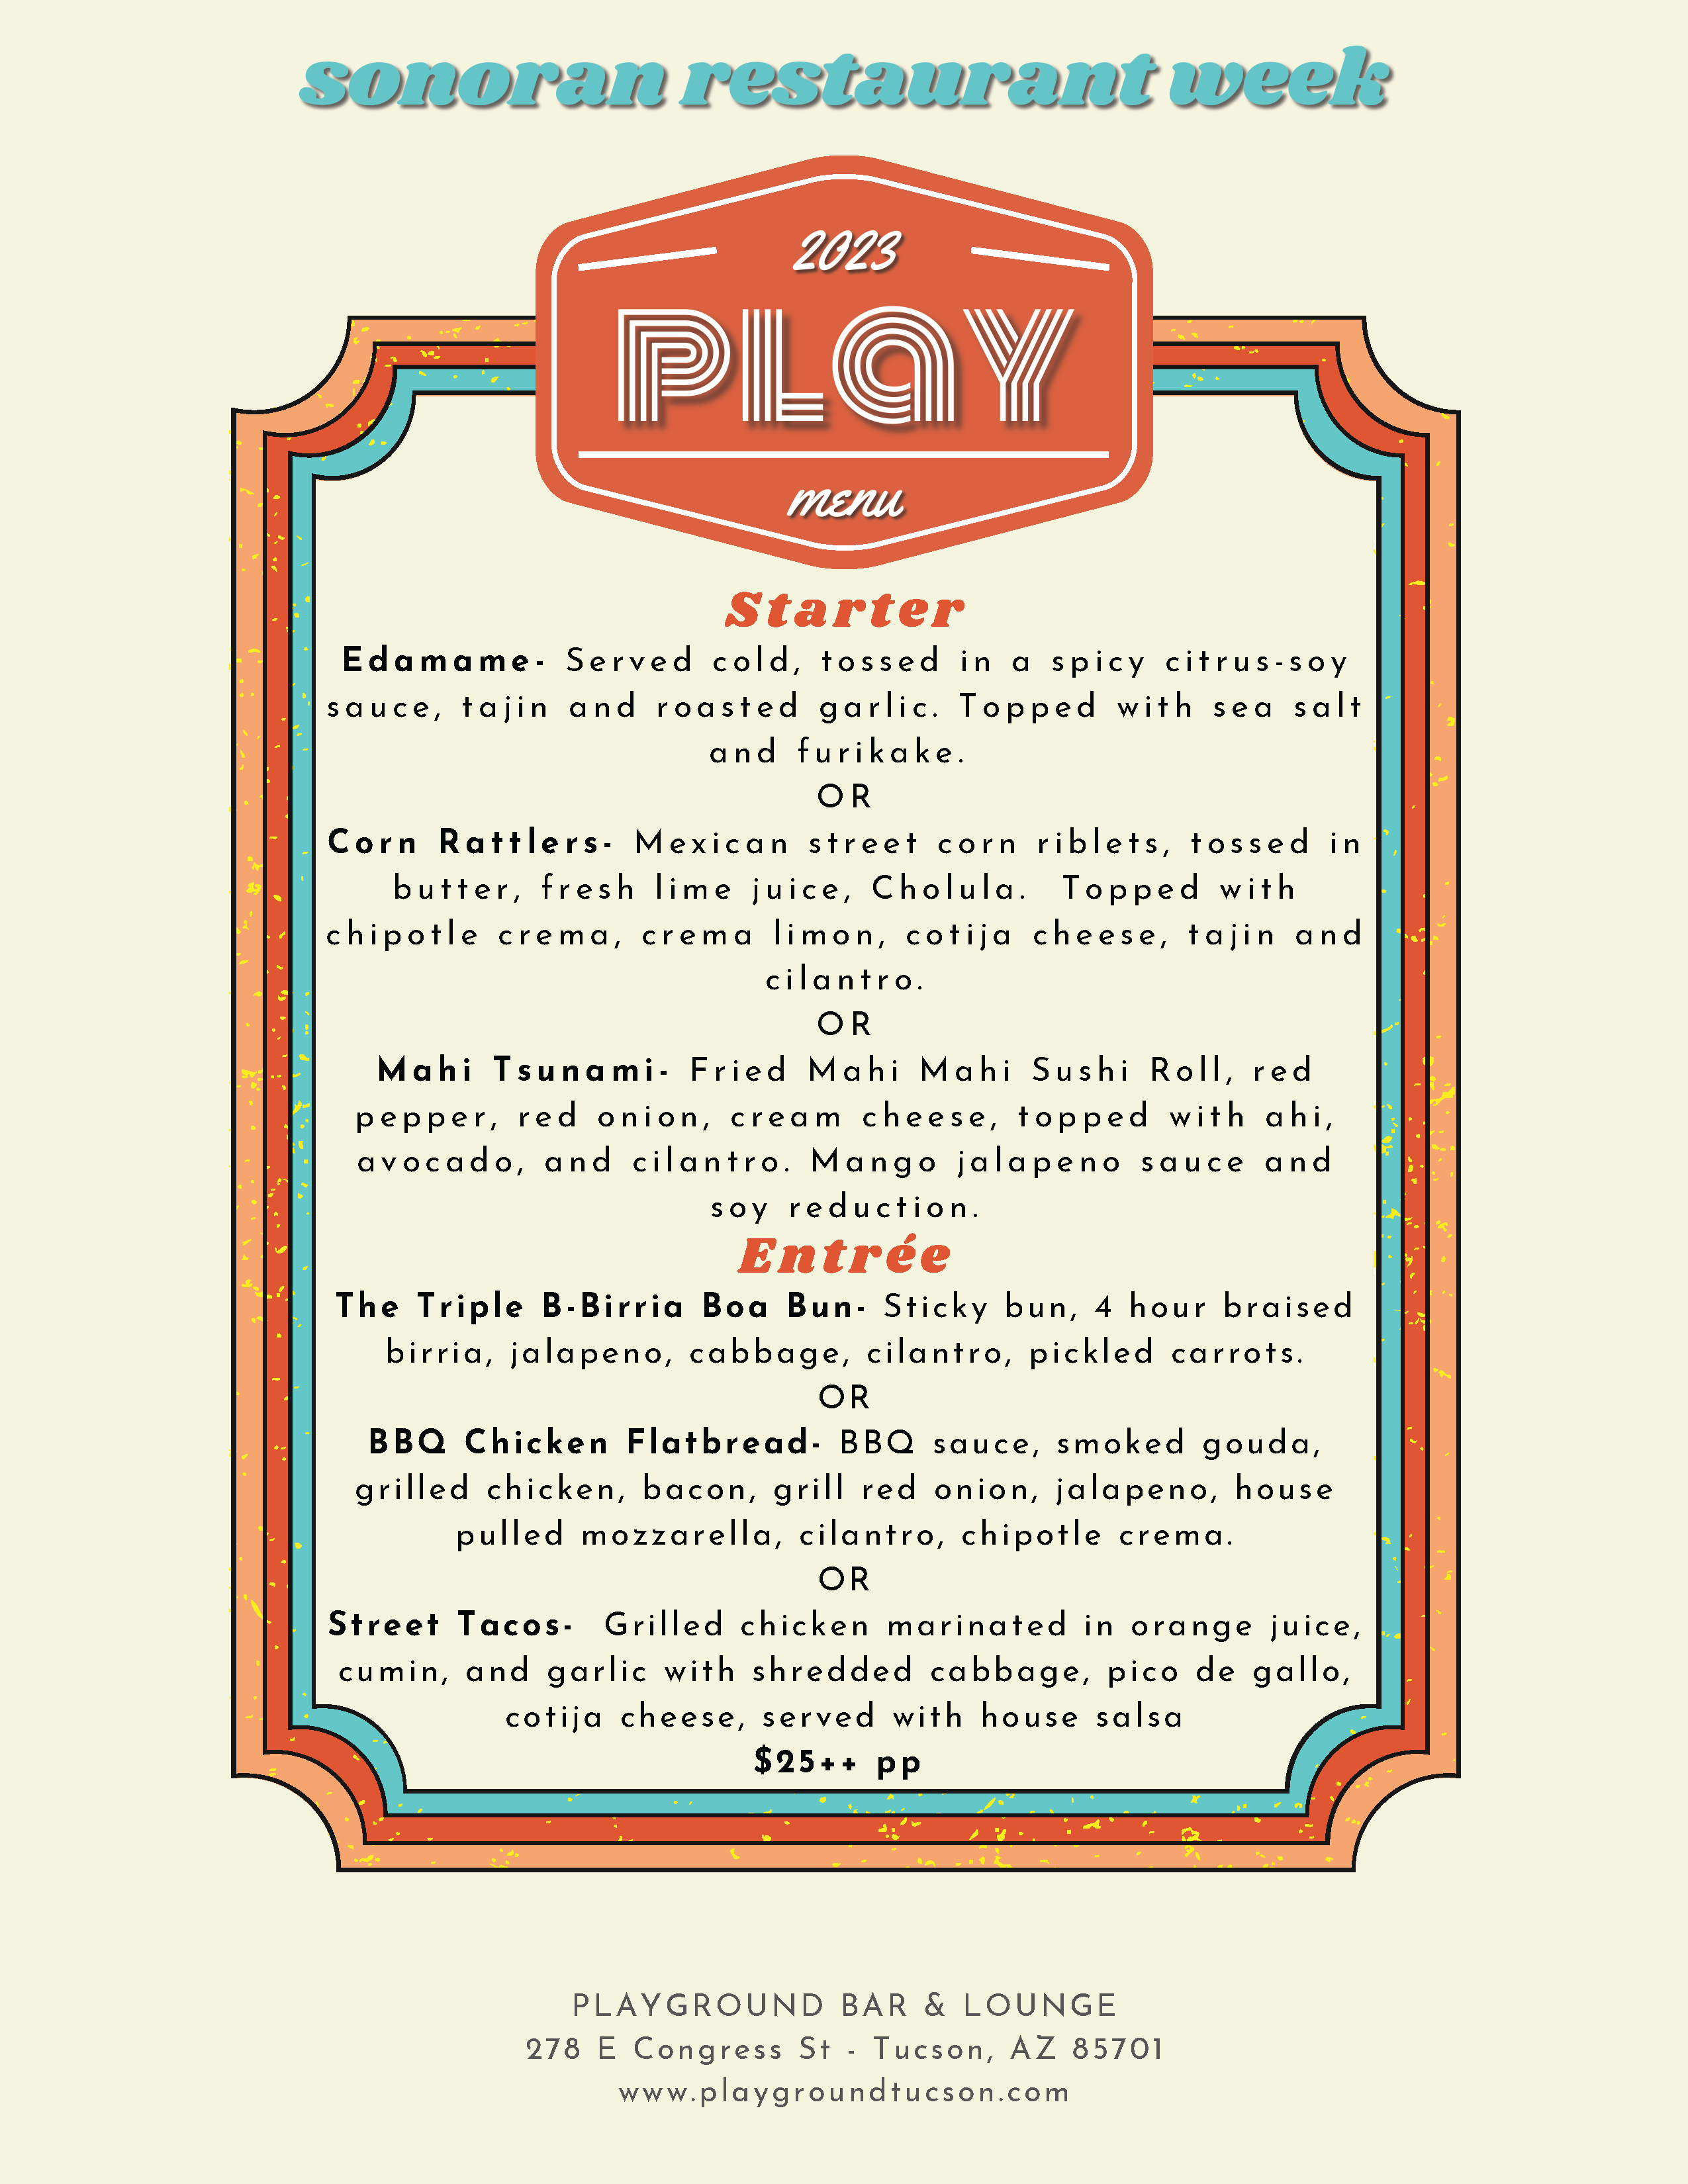 Playground's SRW menu